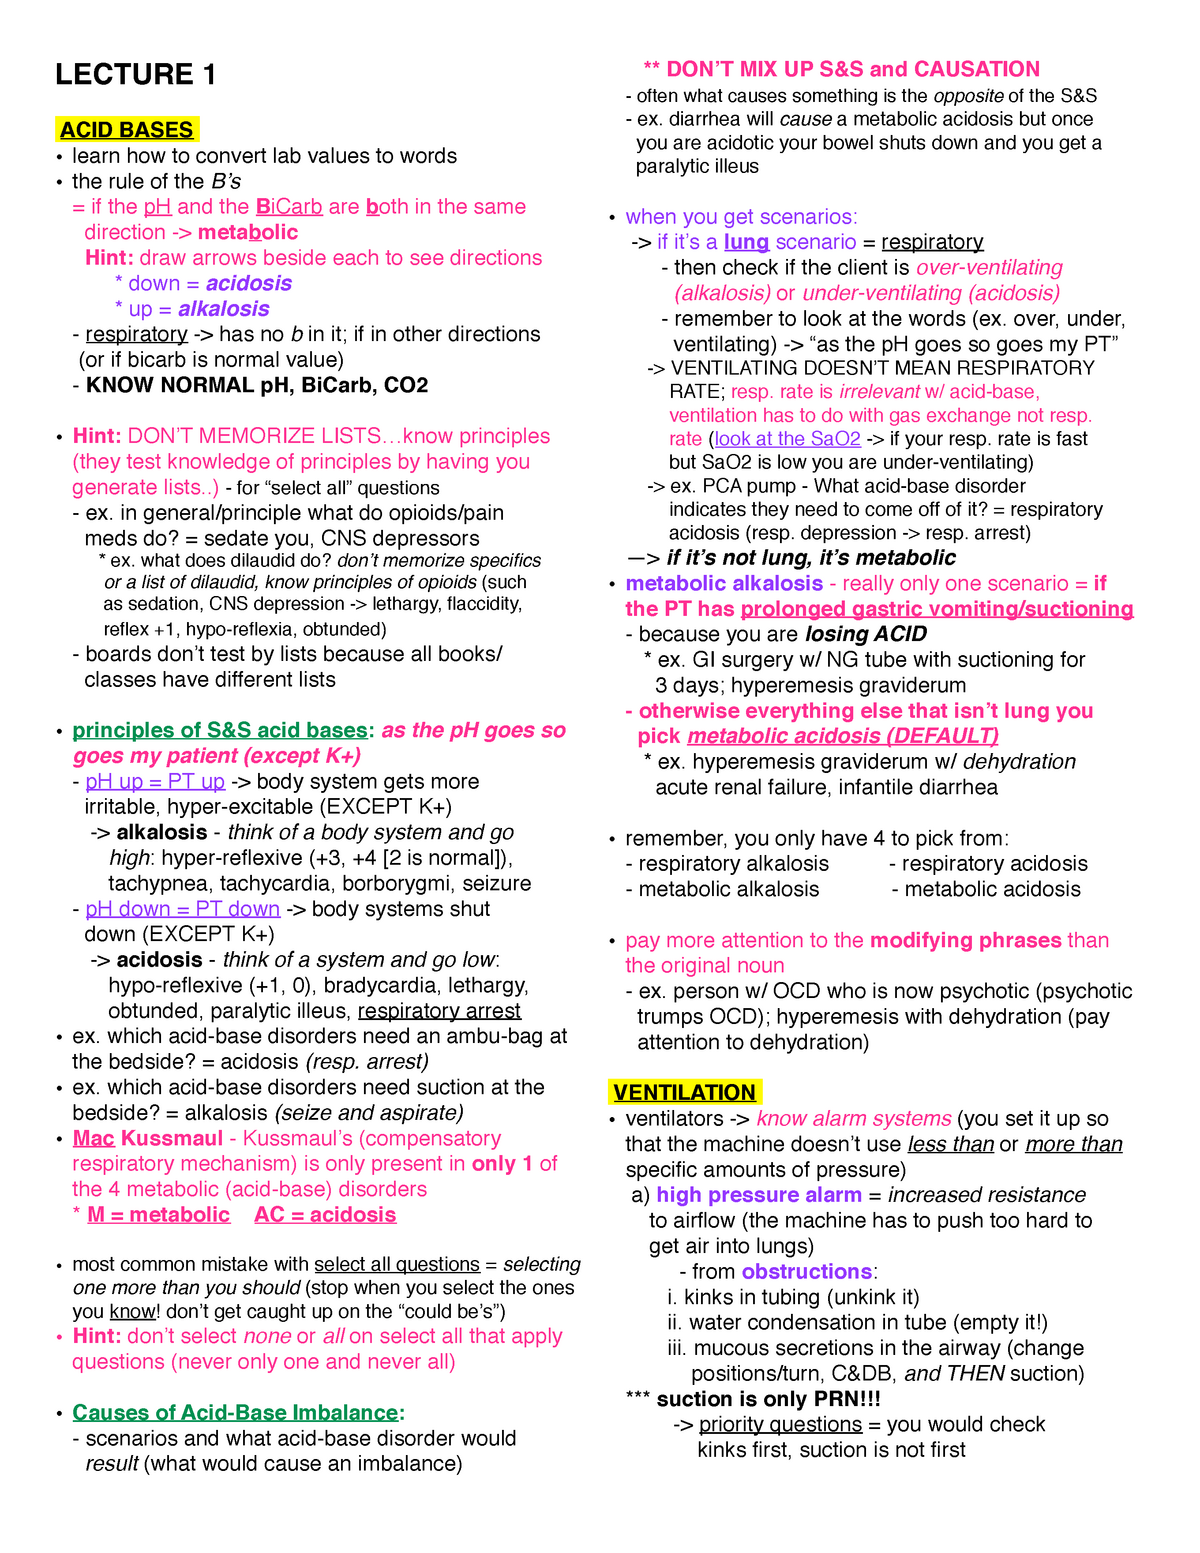 pdf-mark-k-nclex-study-guide-outline-format-for-2021-nclex-exam